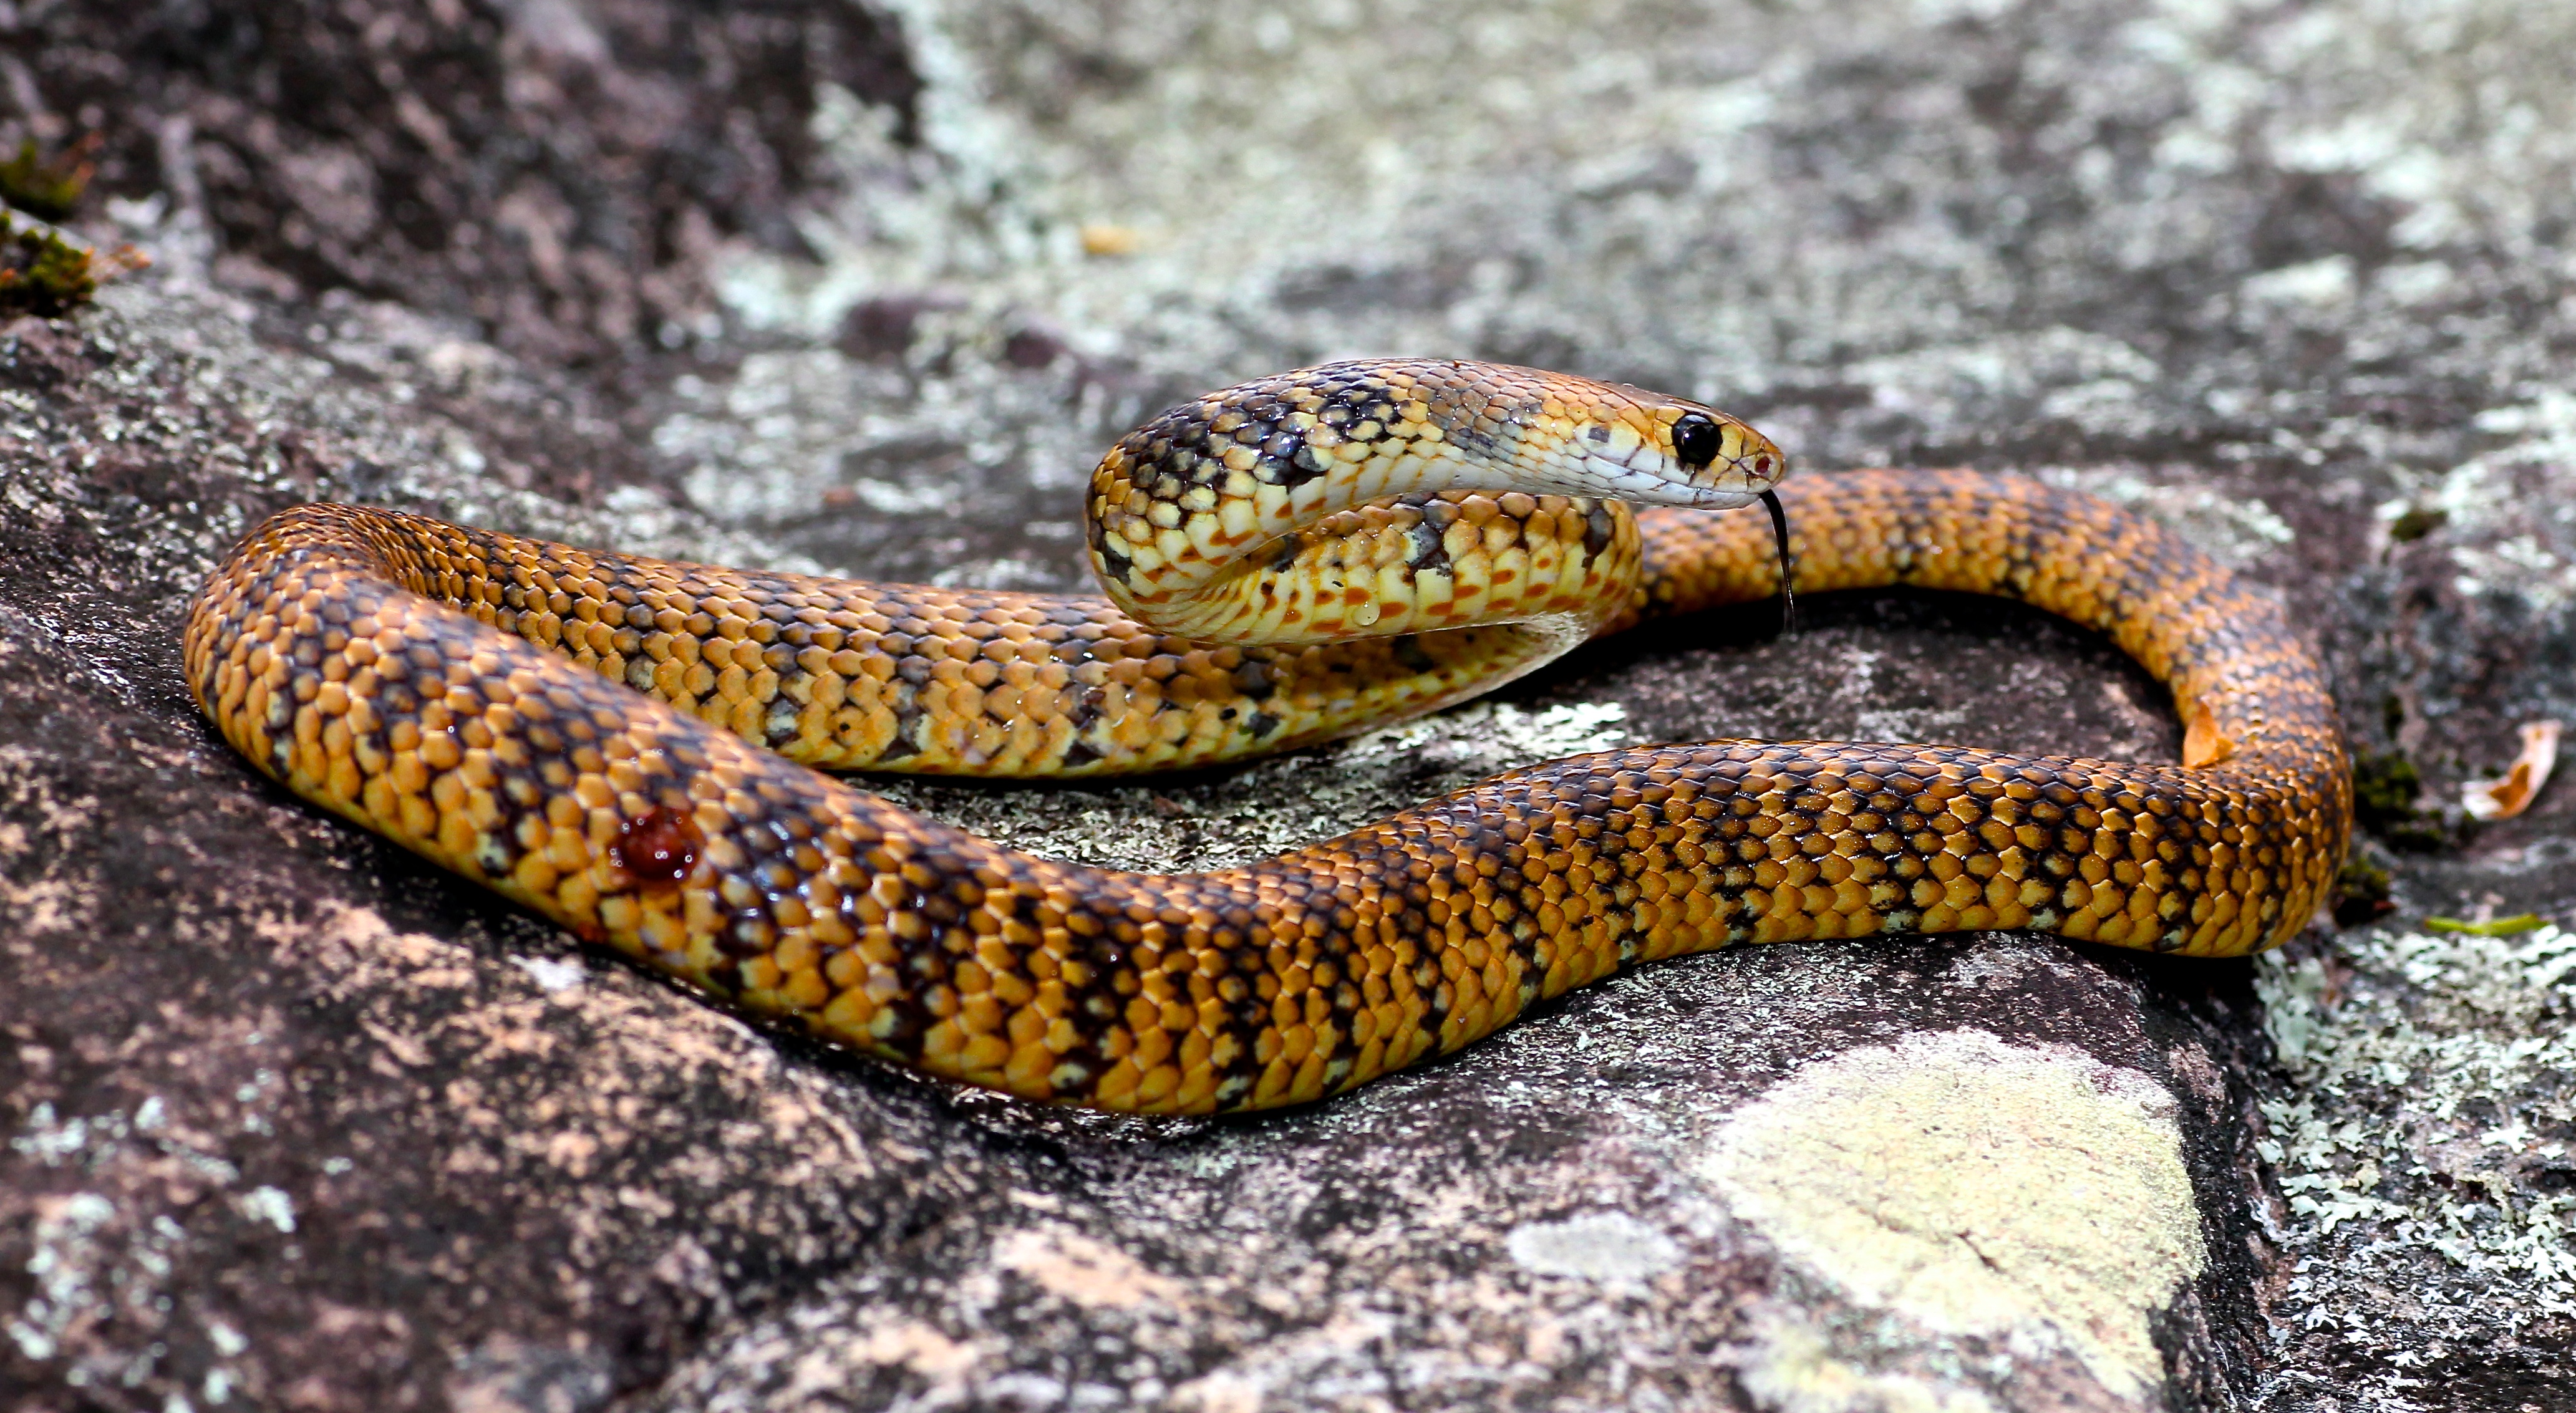 Eastern brown snakes Australia Dangerous Creature